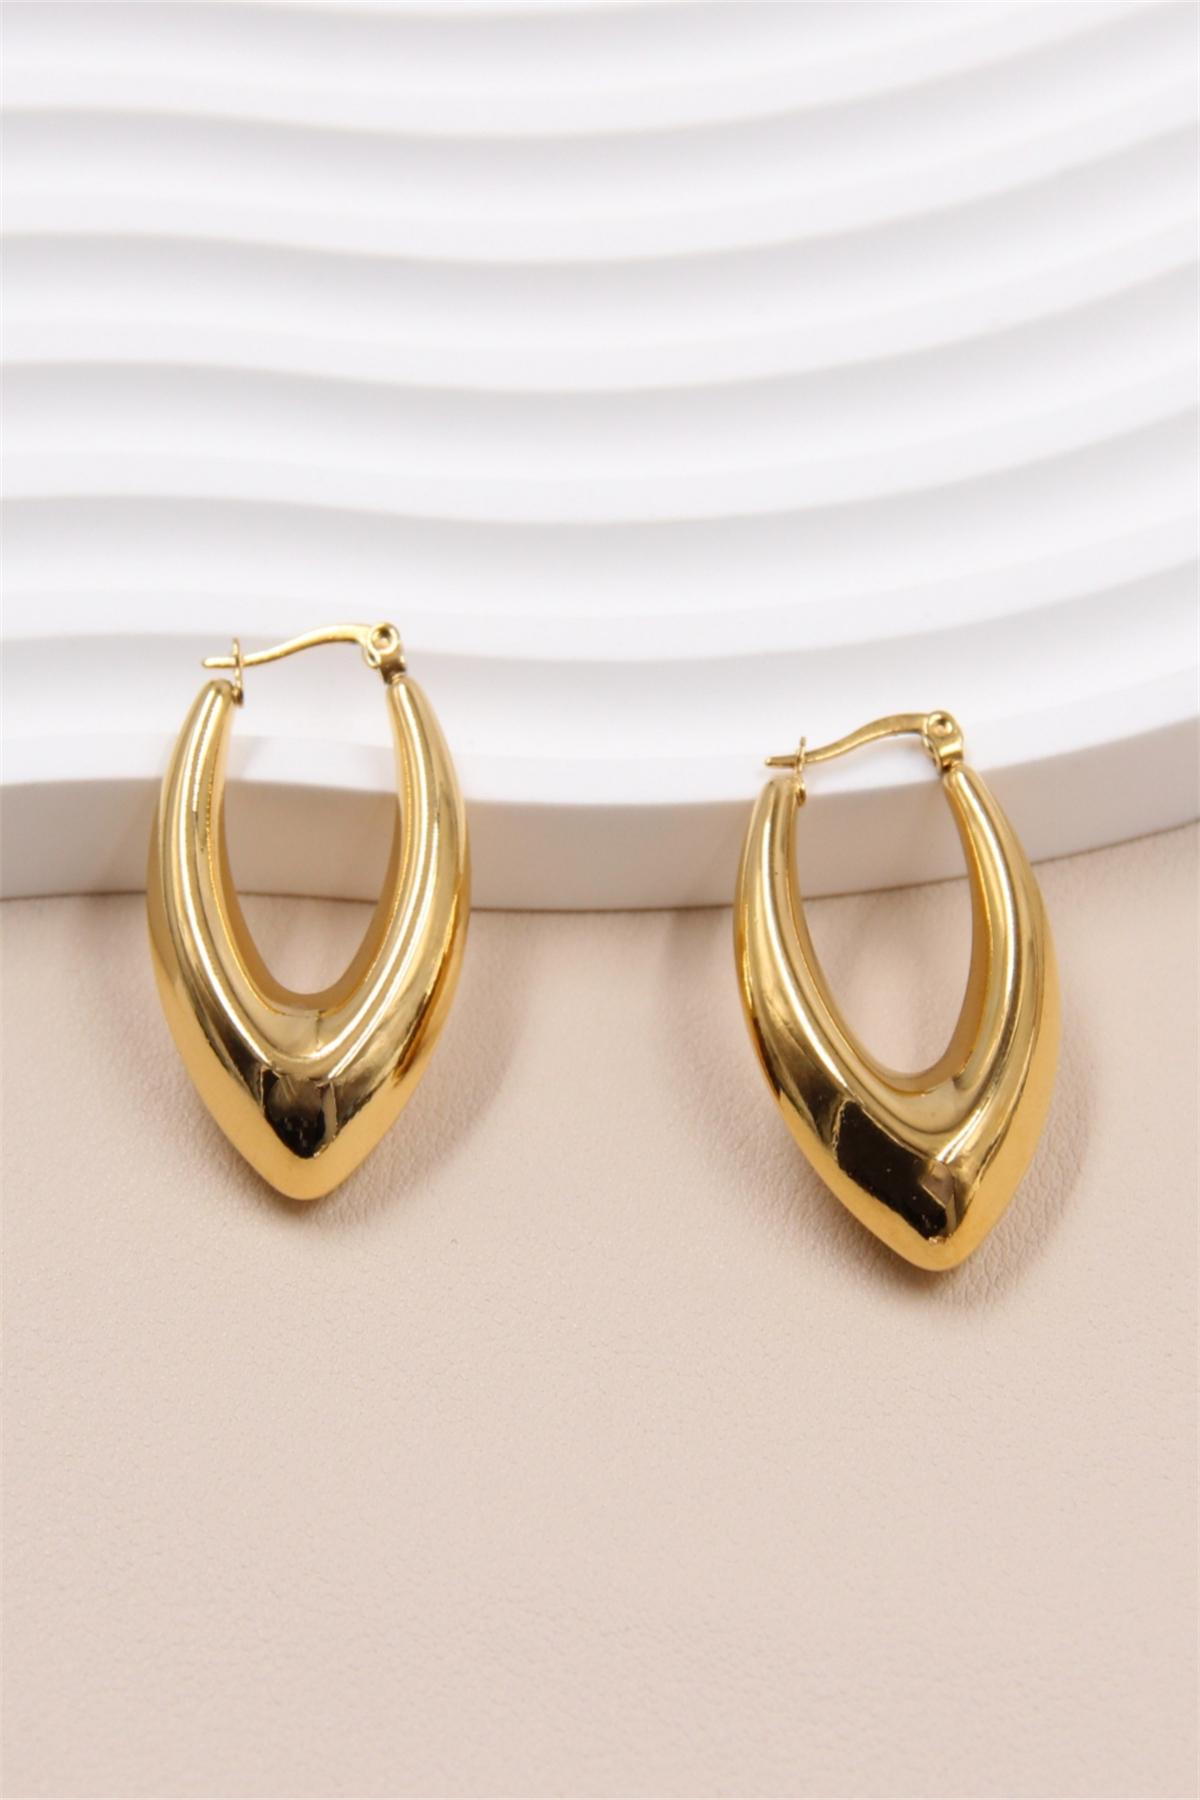 Earrings Accessories Gold BELLISSIMA 193BO06 #c Efashion Paris